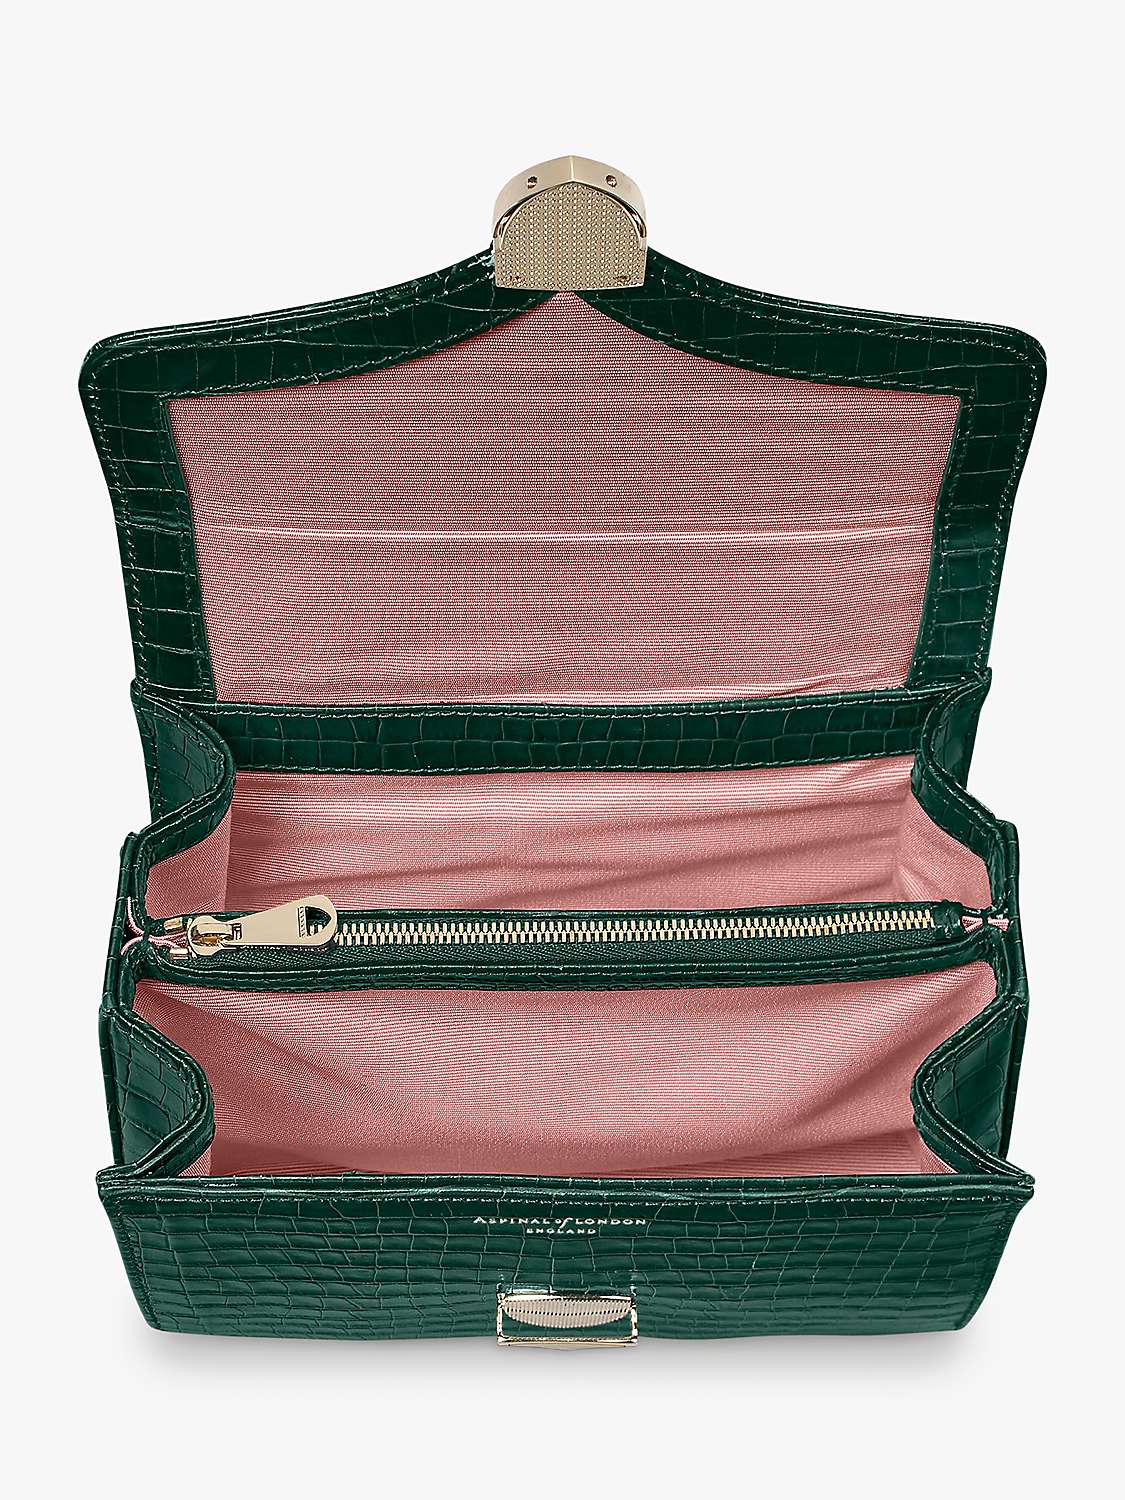 Buy Aspinal of London Mayfair Croc Leather Midi Grab Bag Online at johnlewis.com